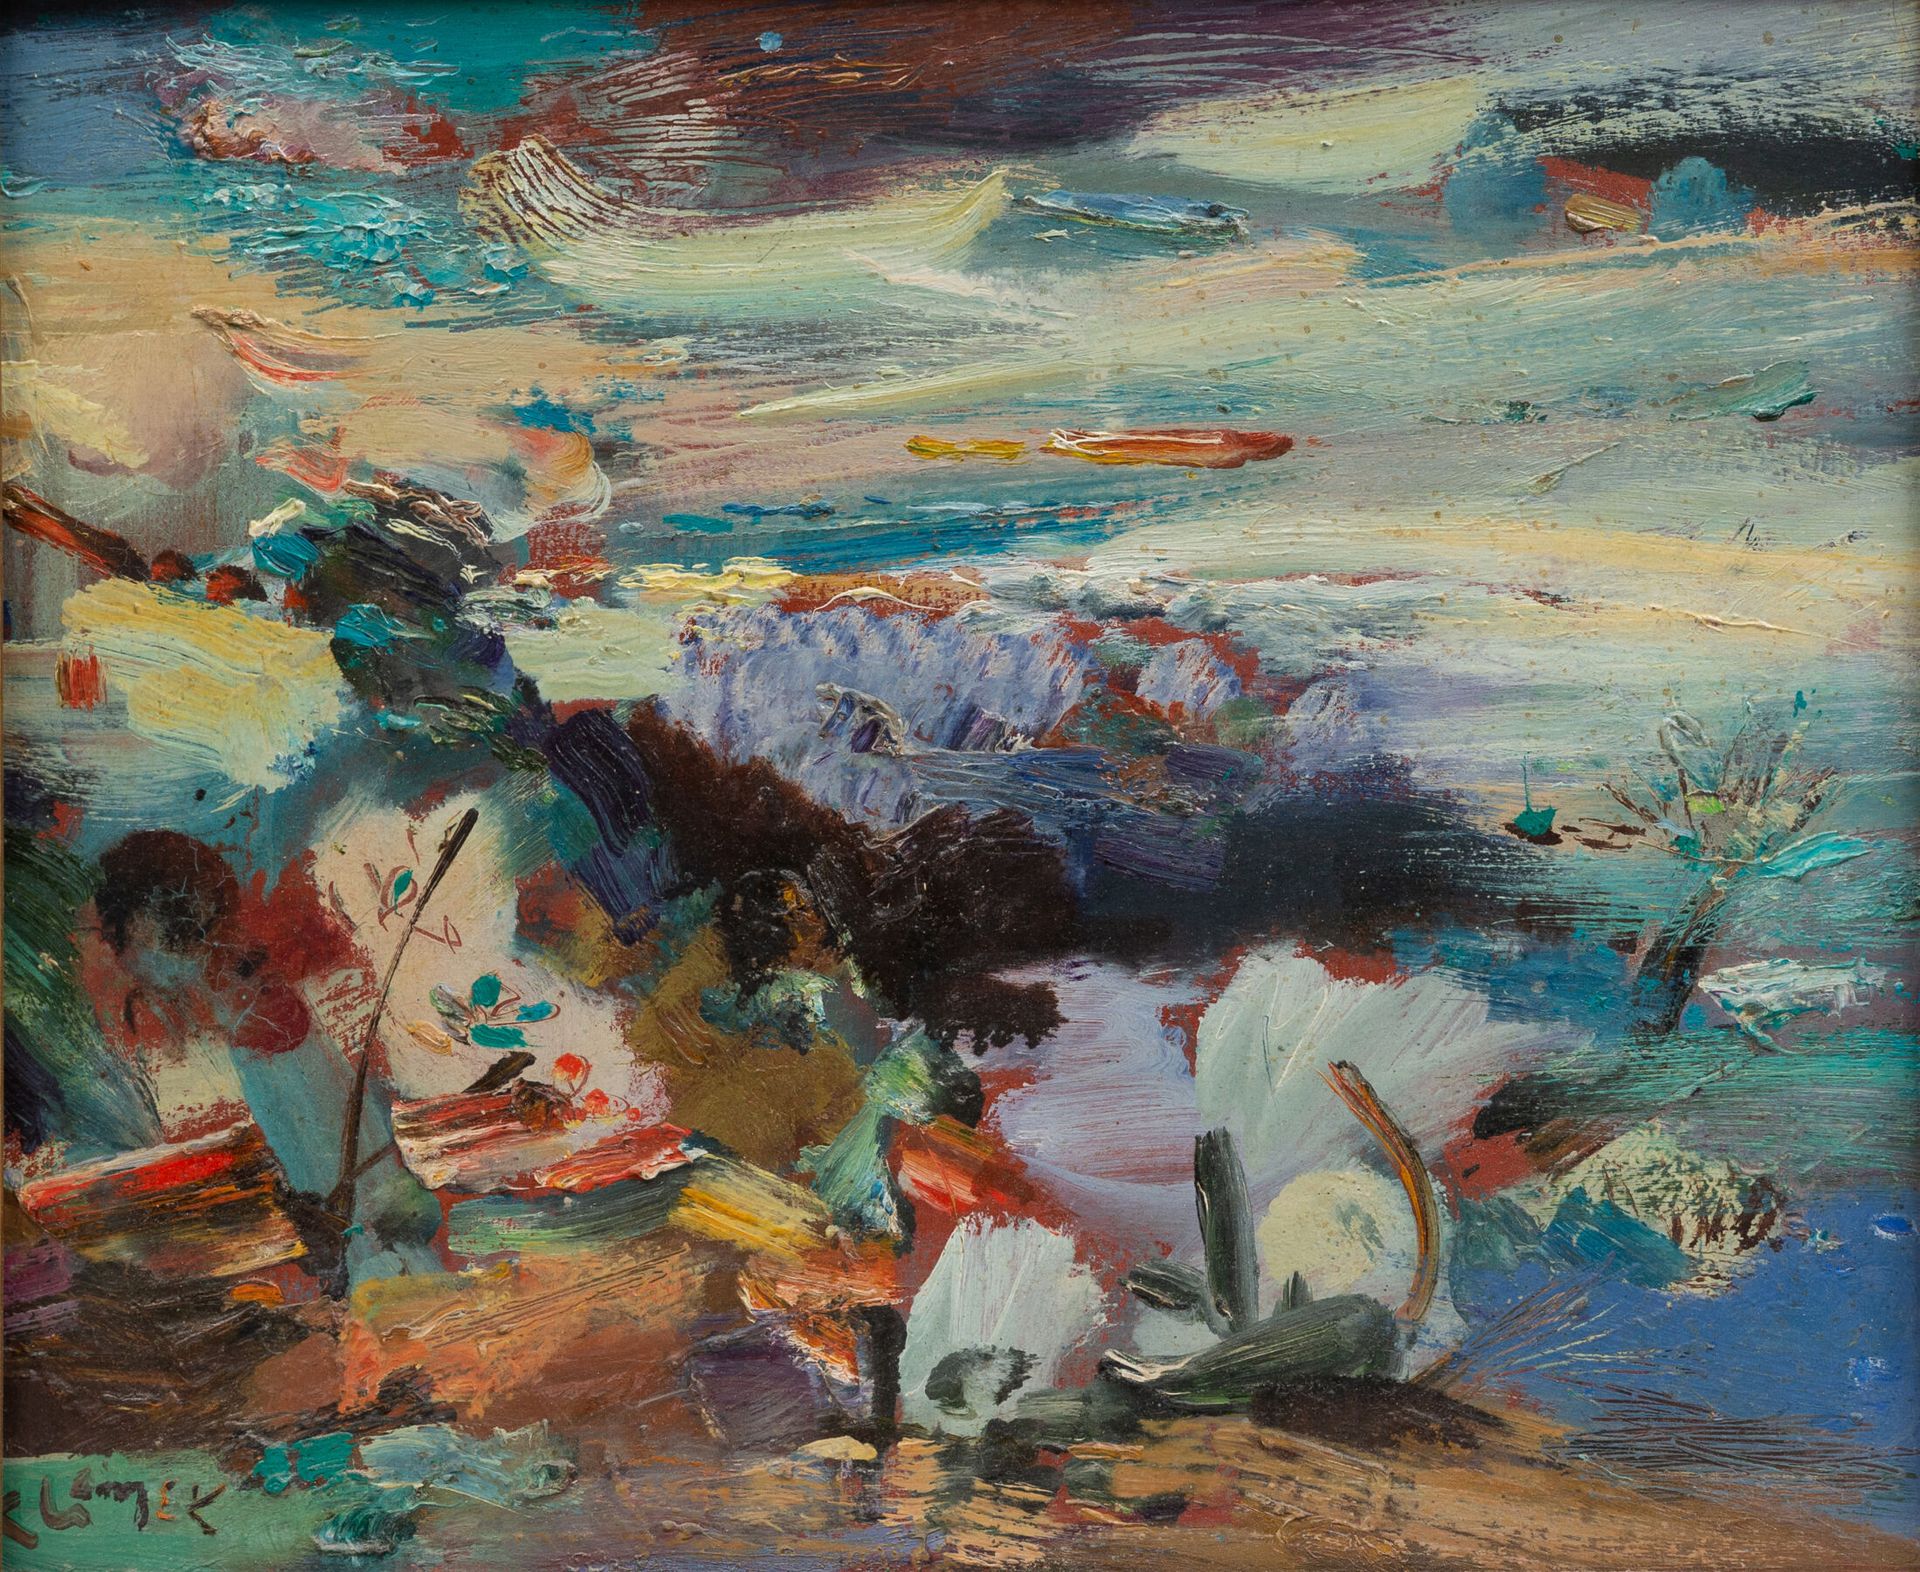 Null 路德维希-克里梅克（1912-1992）。
海景画。
木板上的油画，左下角有签名。
高_38厘米，宽_46厘米
装在一个镀金的木框里。